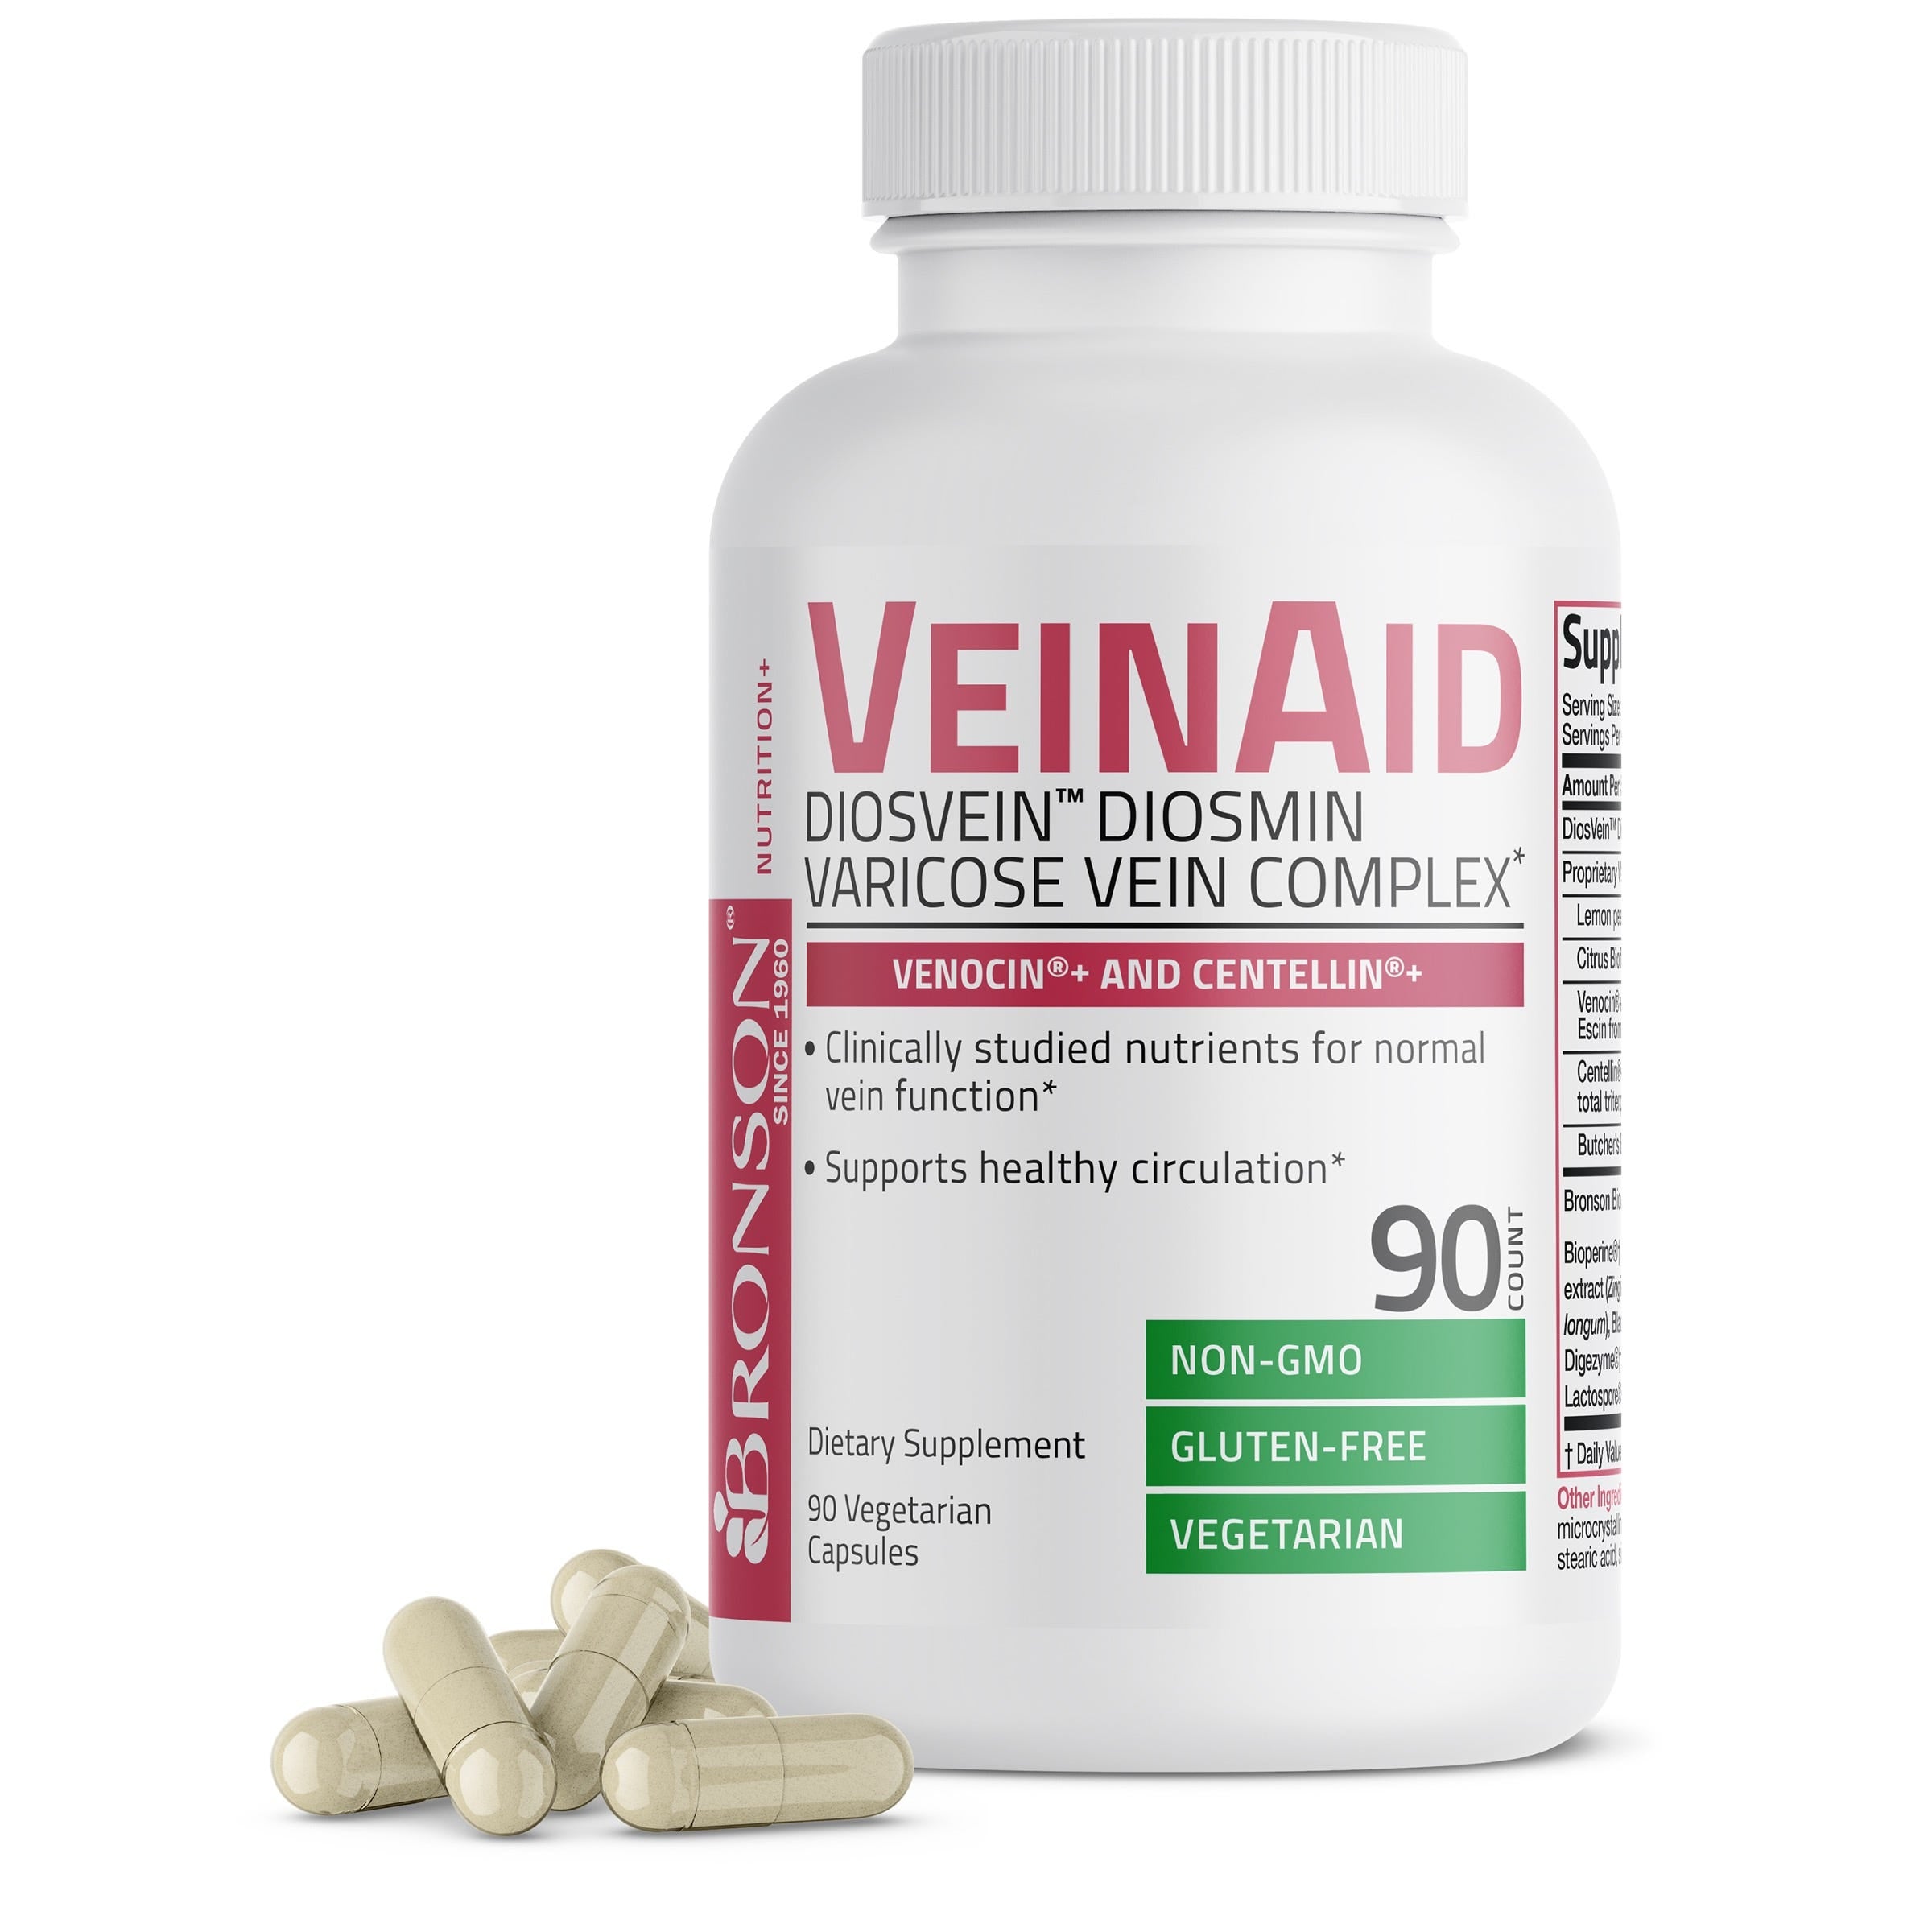 VeinAid DiosVein™ Diosmin Varicose Vein Complex - 90 Vegetarian Capsules view 1 of 6